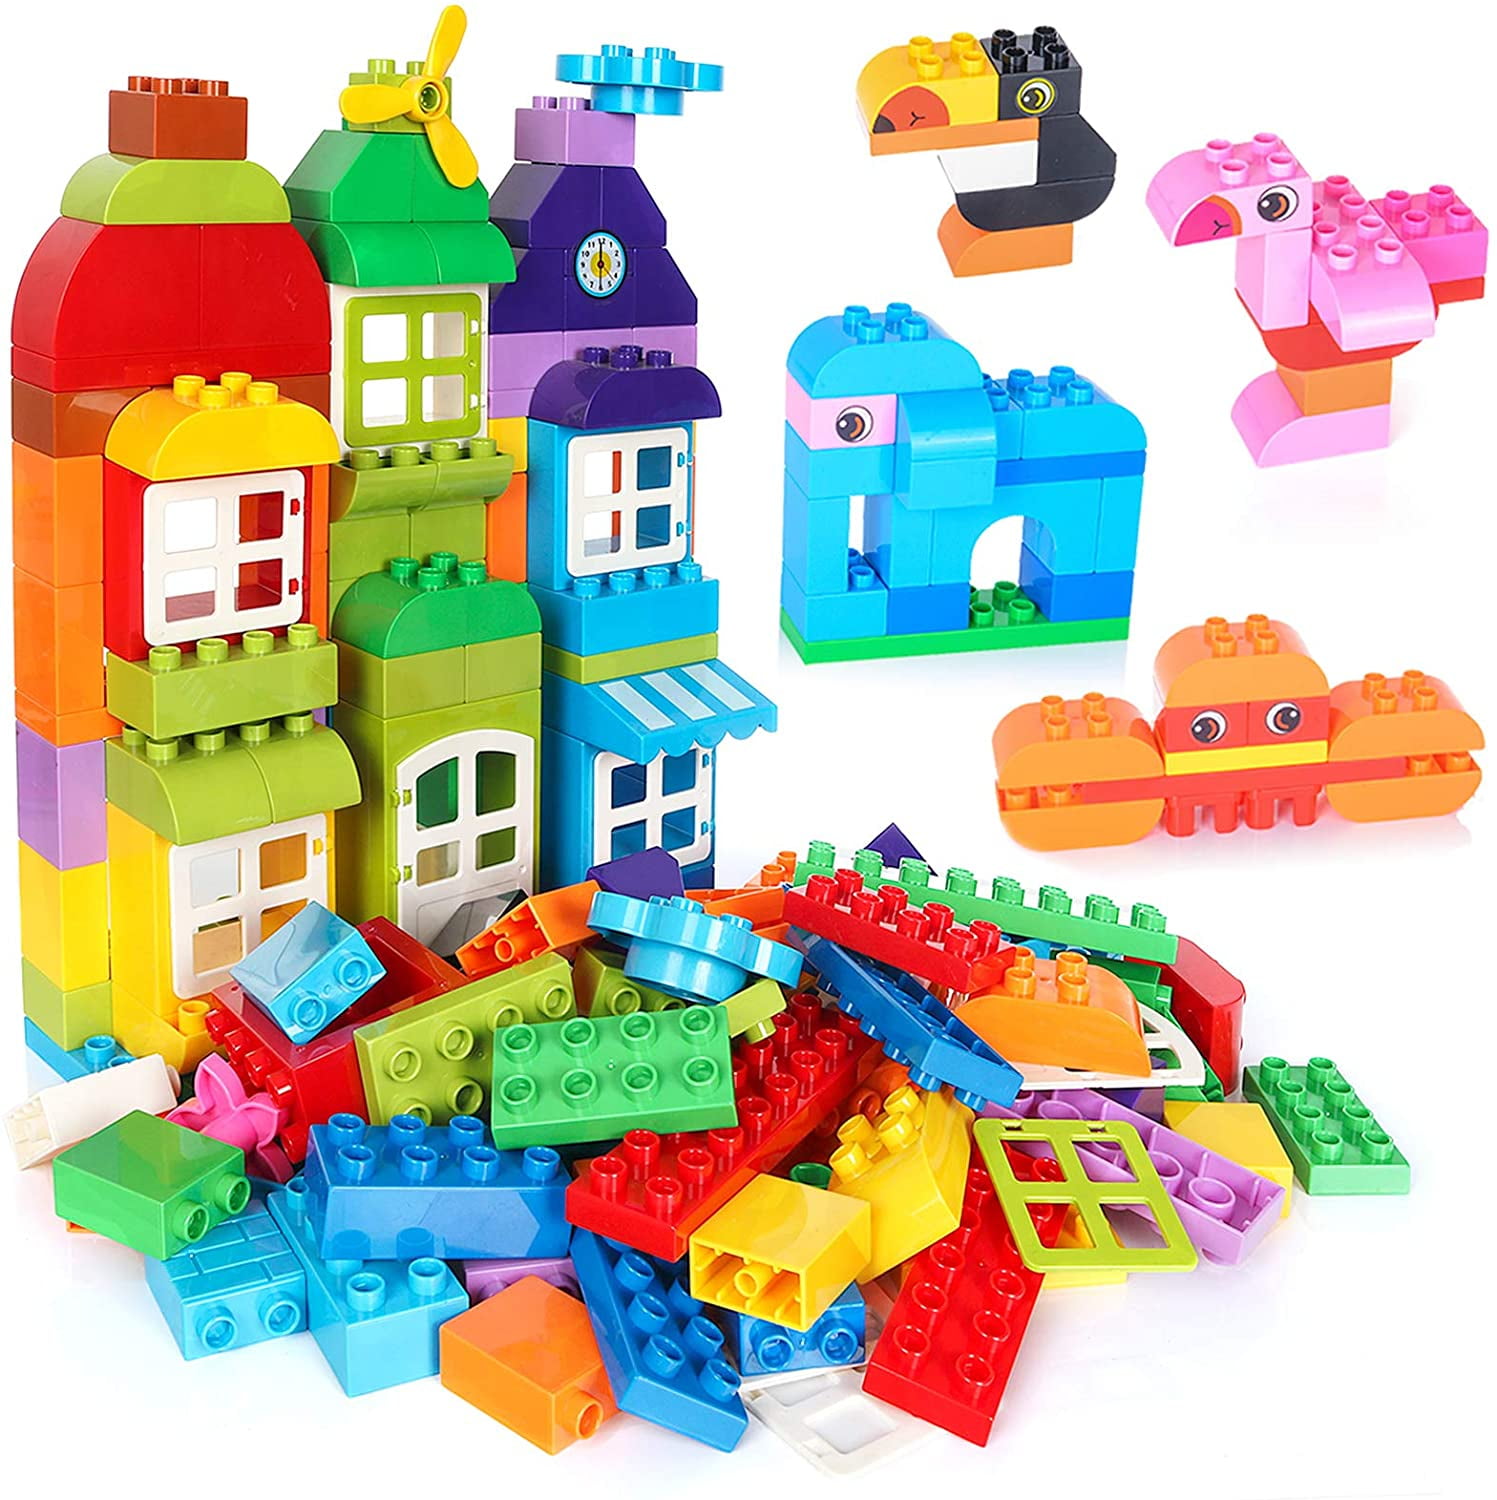 large building blocks plastic